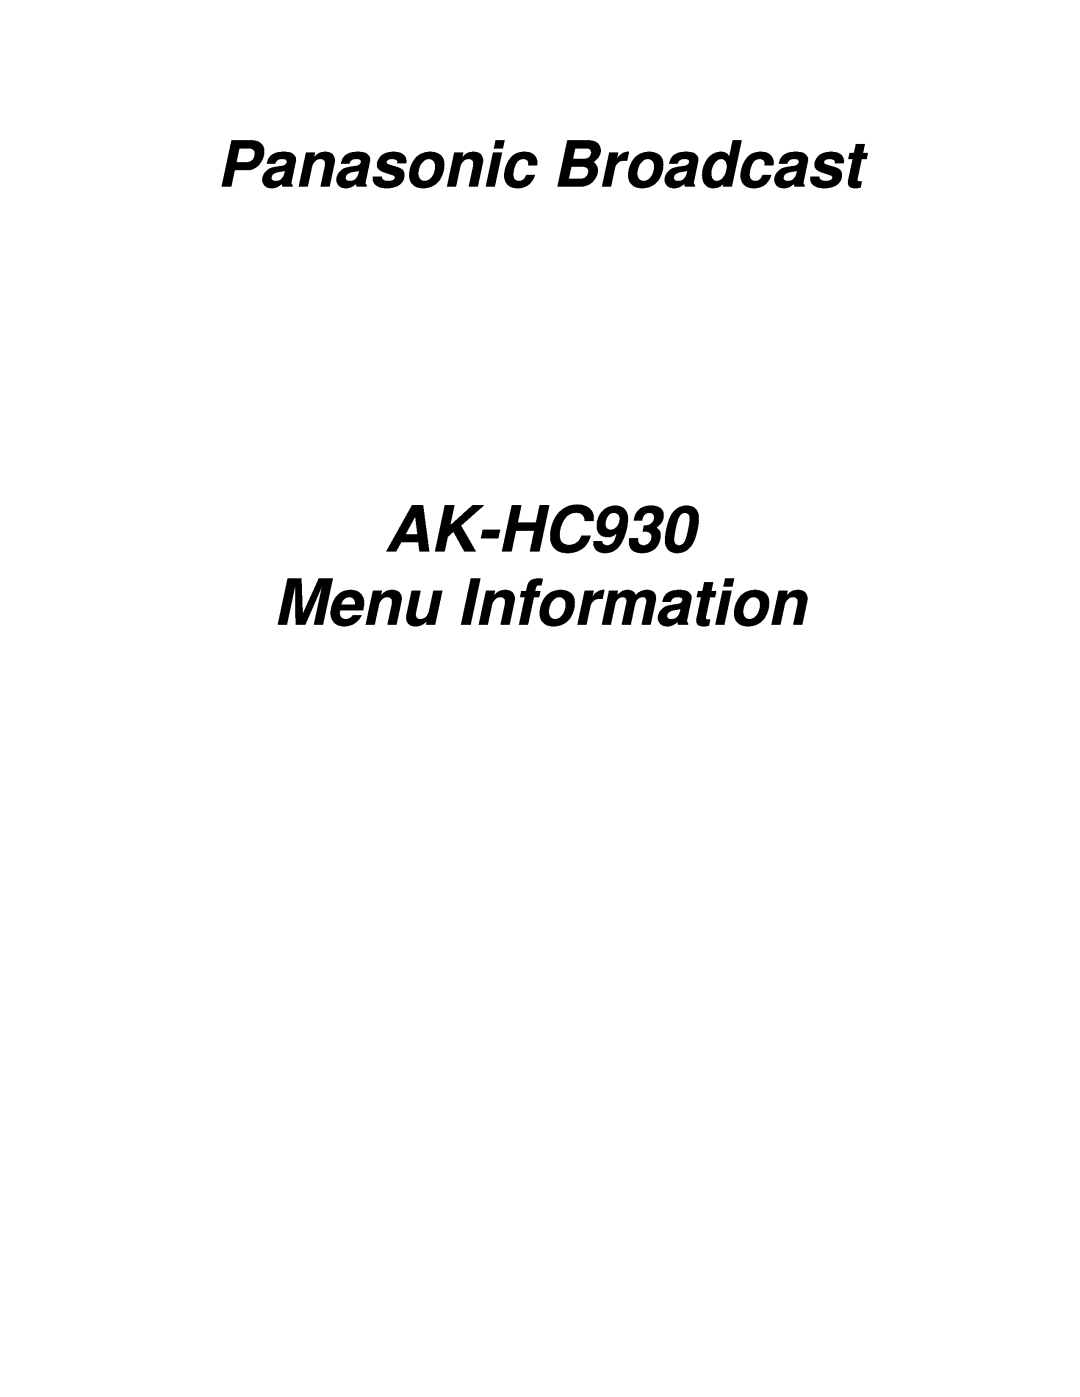 Panasonic manual Panasonic Broadcast, AK-HC930 Menu Information 